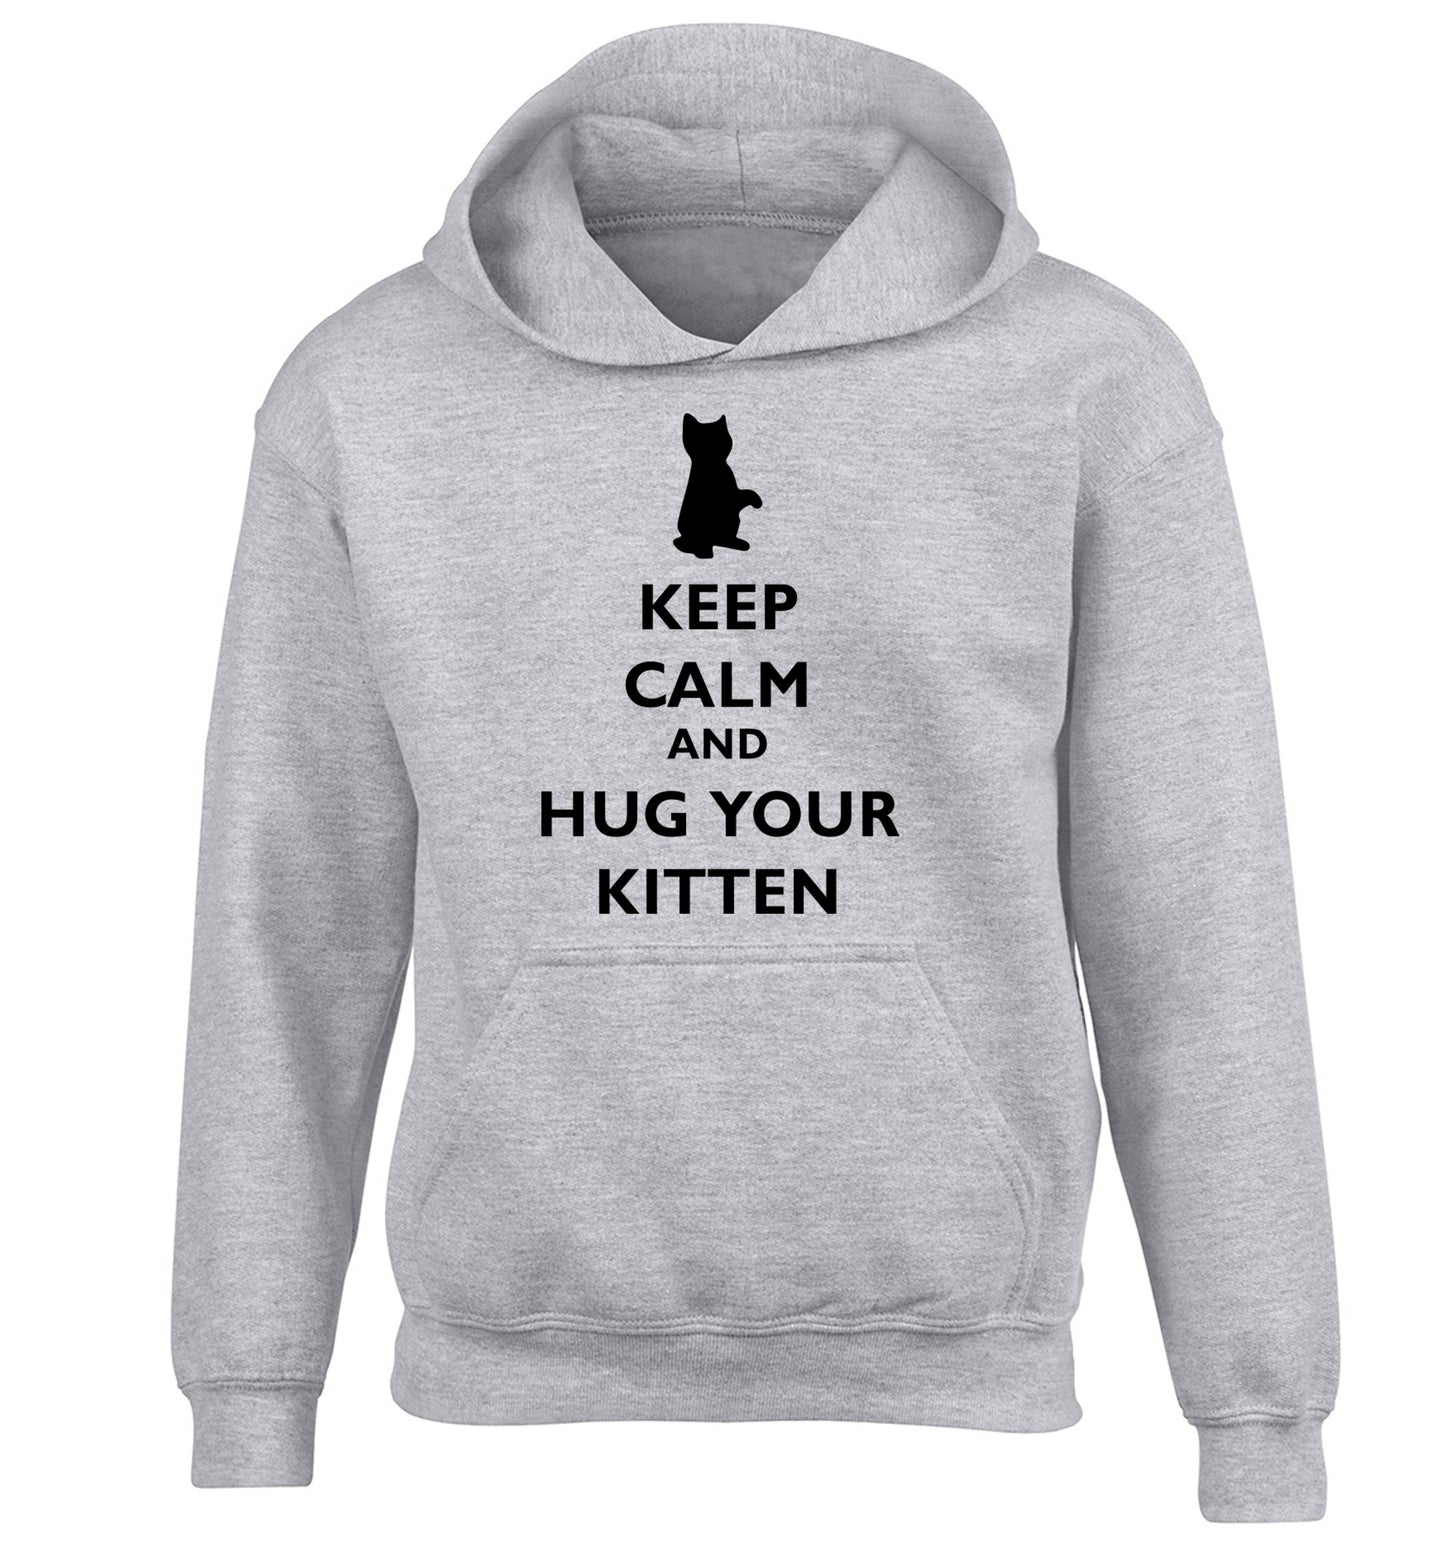 Keep calm and hug your kitten children's grey hoodie 12-13 Years